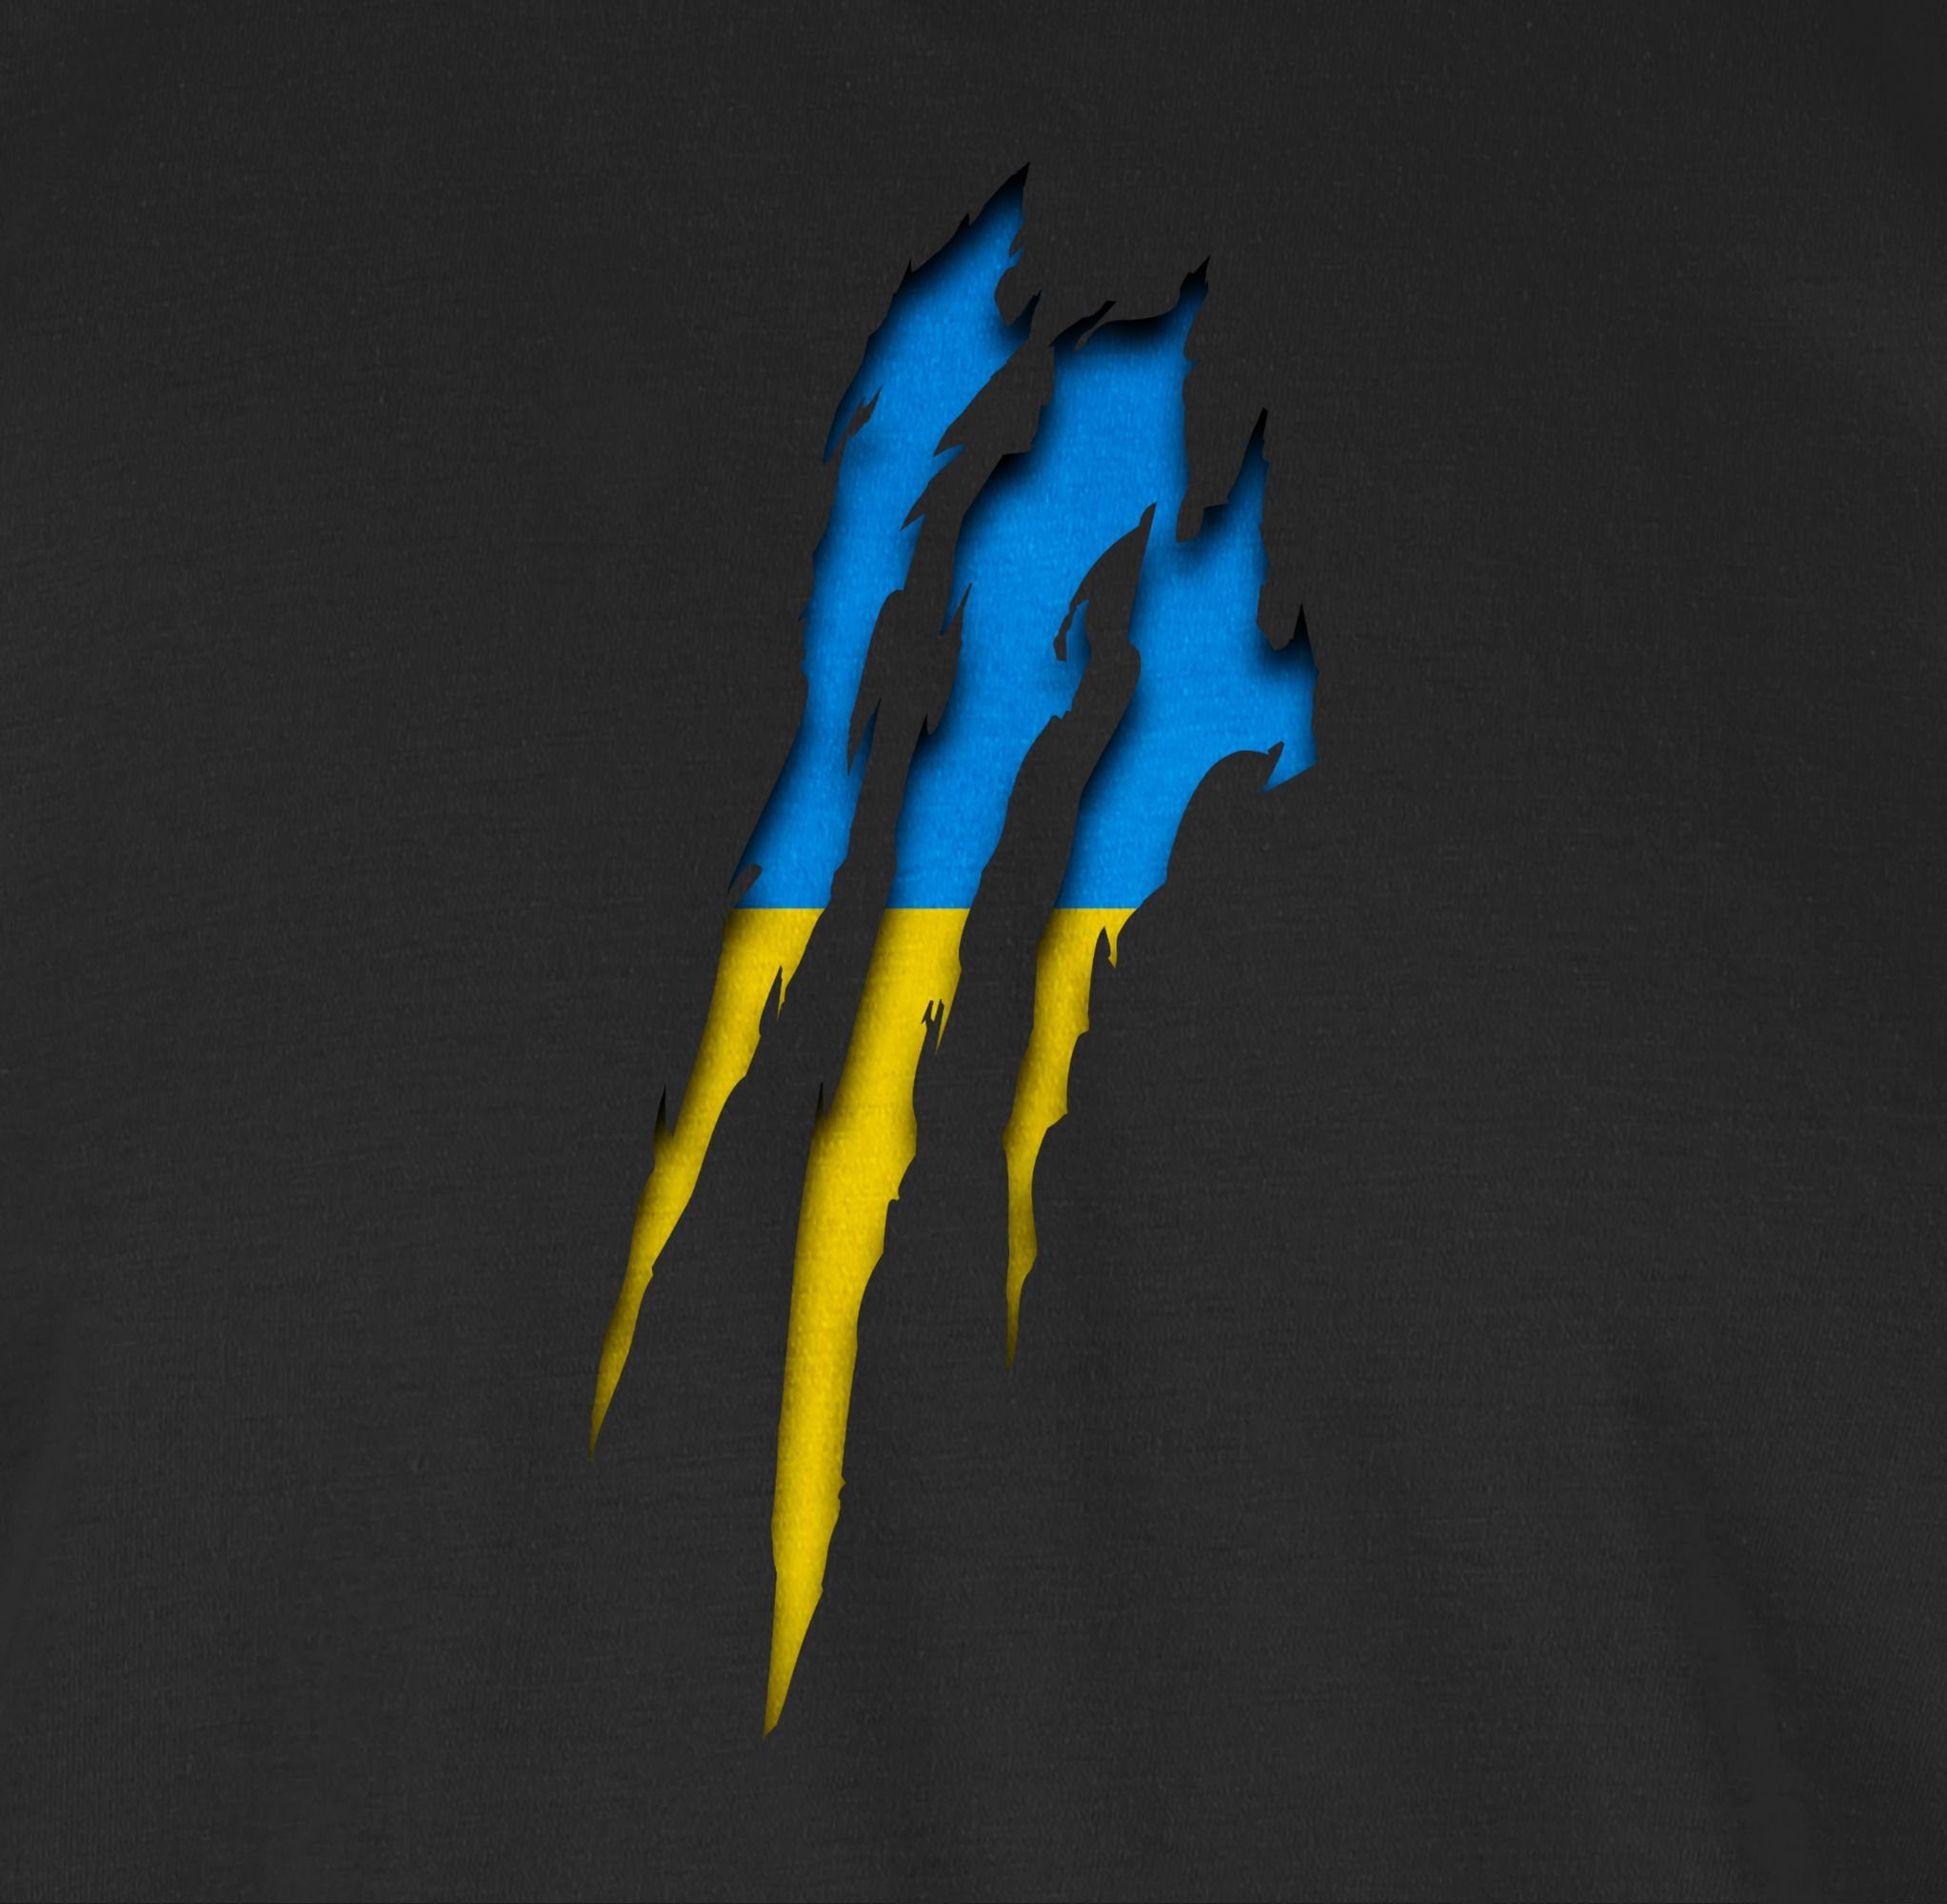 Ukraine Krallenspuren Länder 1 Schwarz Wappen Shirtracer T-Shirt